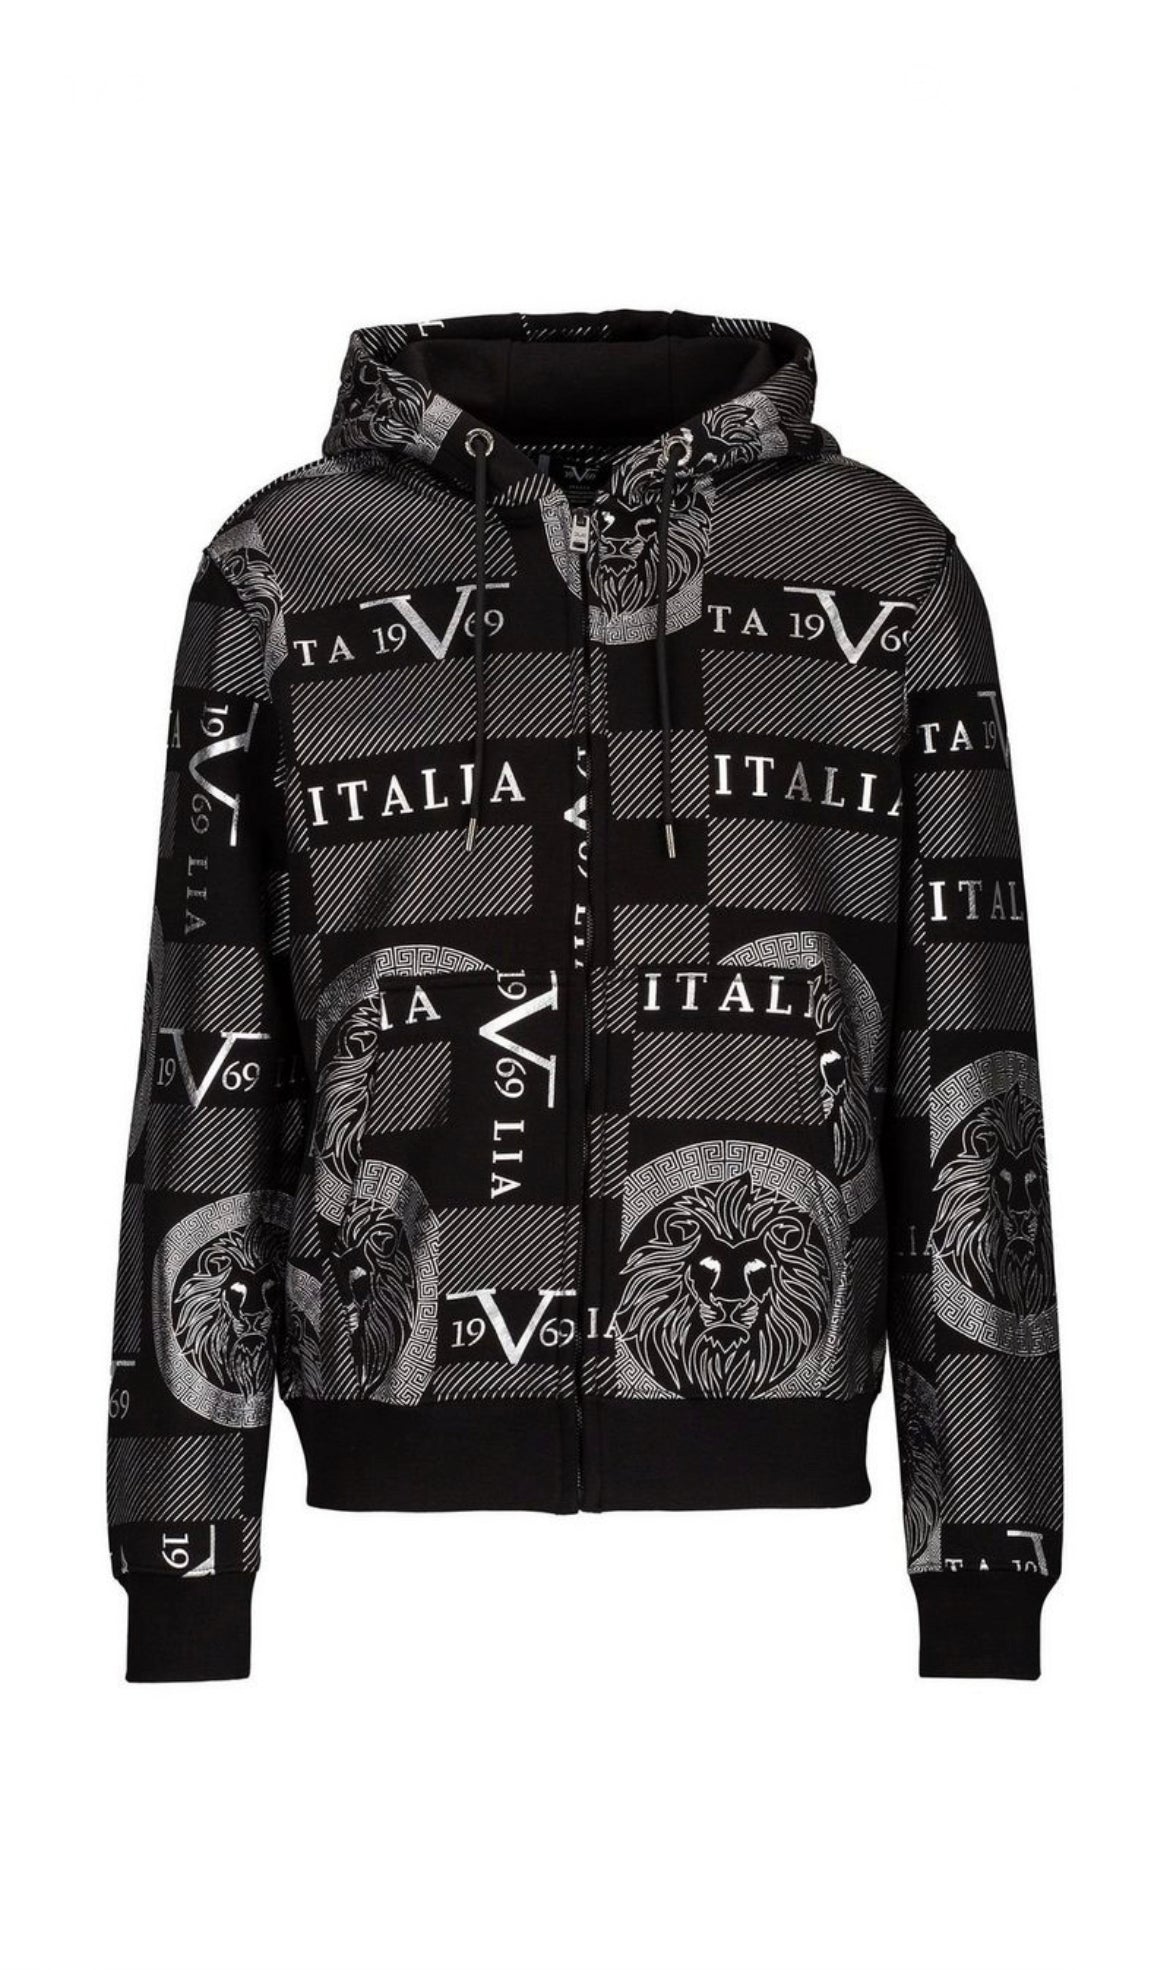 19V69 Italia by Versace Strickjacket zip